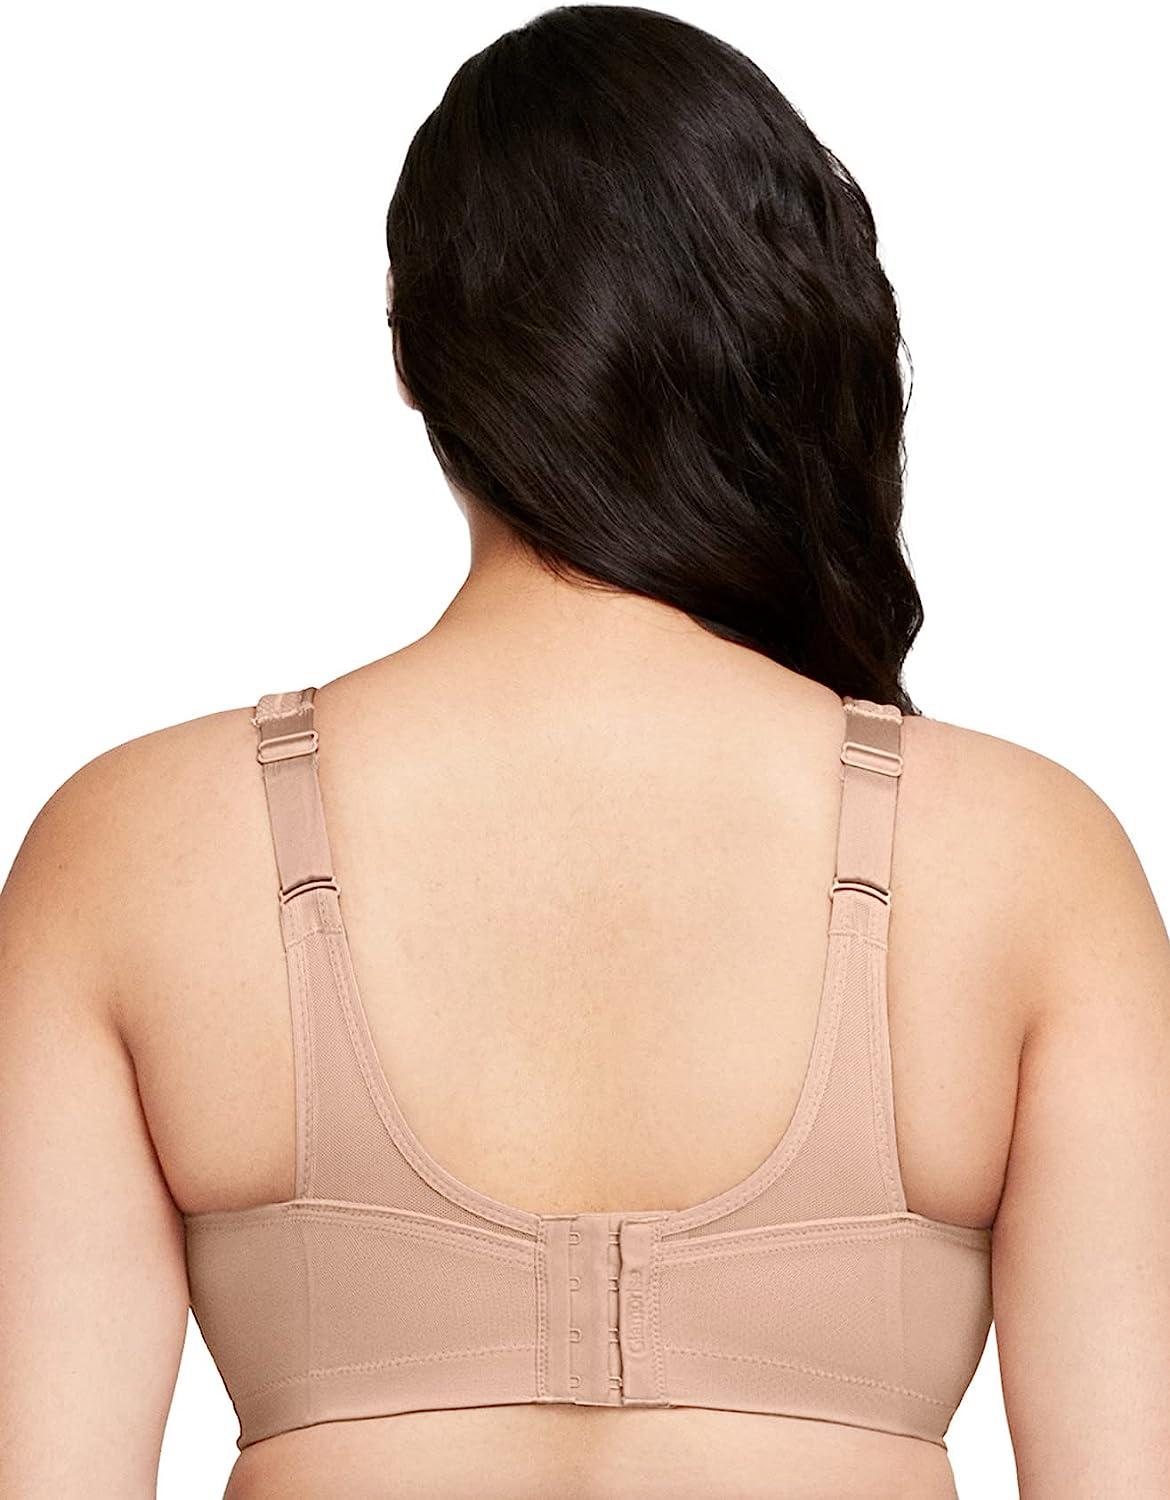 Glamorise Women's MagicLift Front Close Posture Back Support Bra